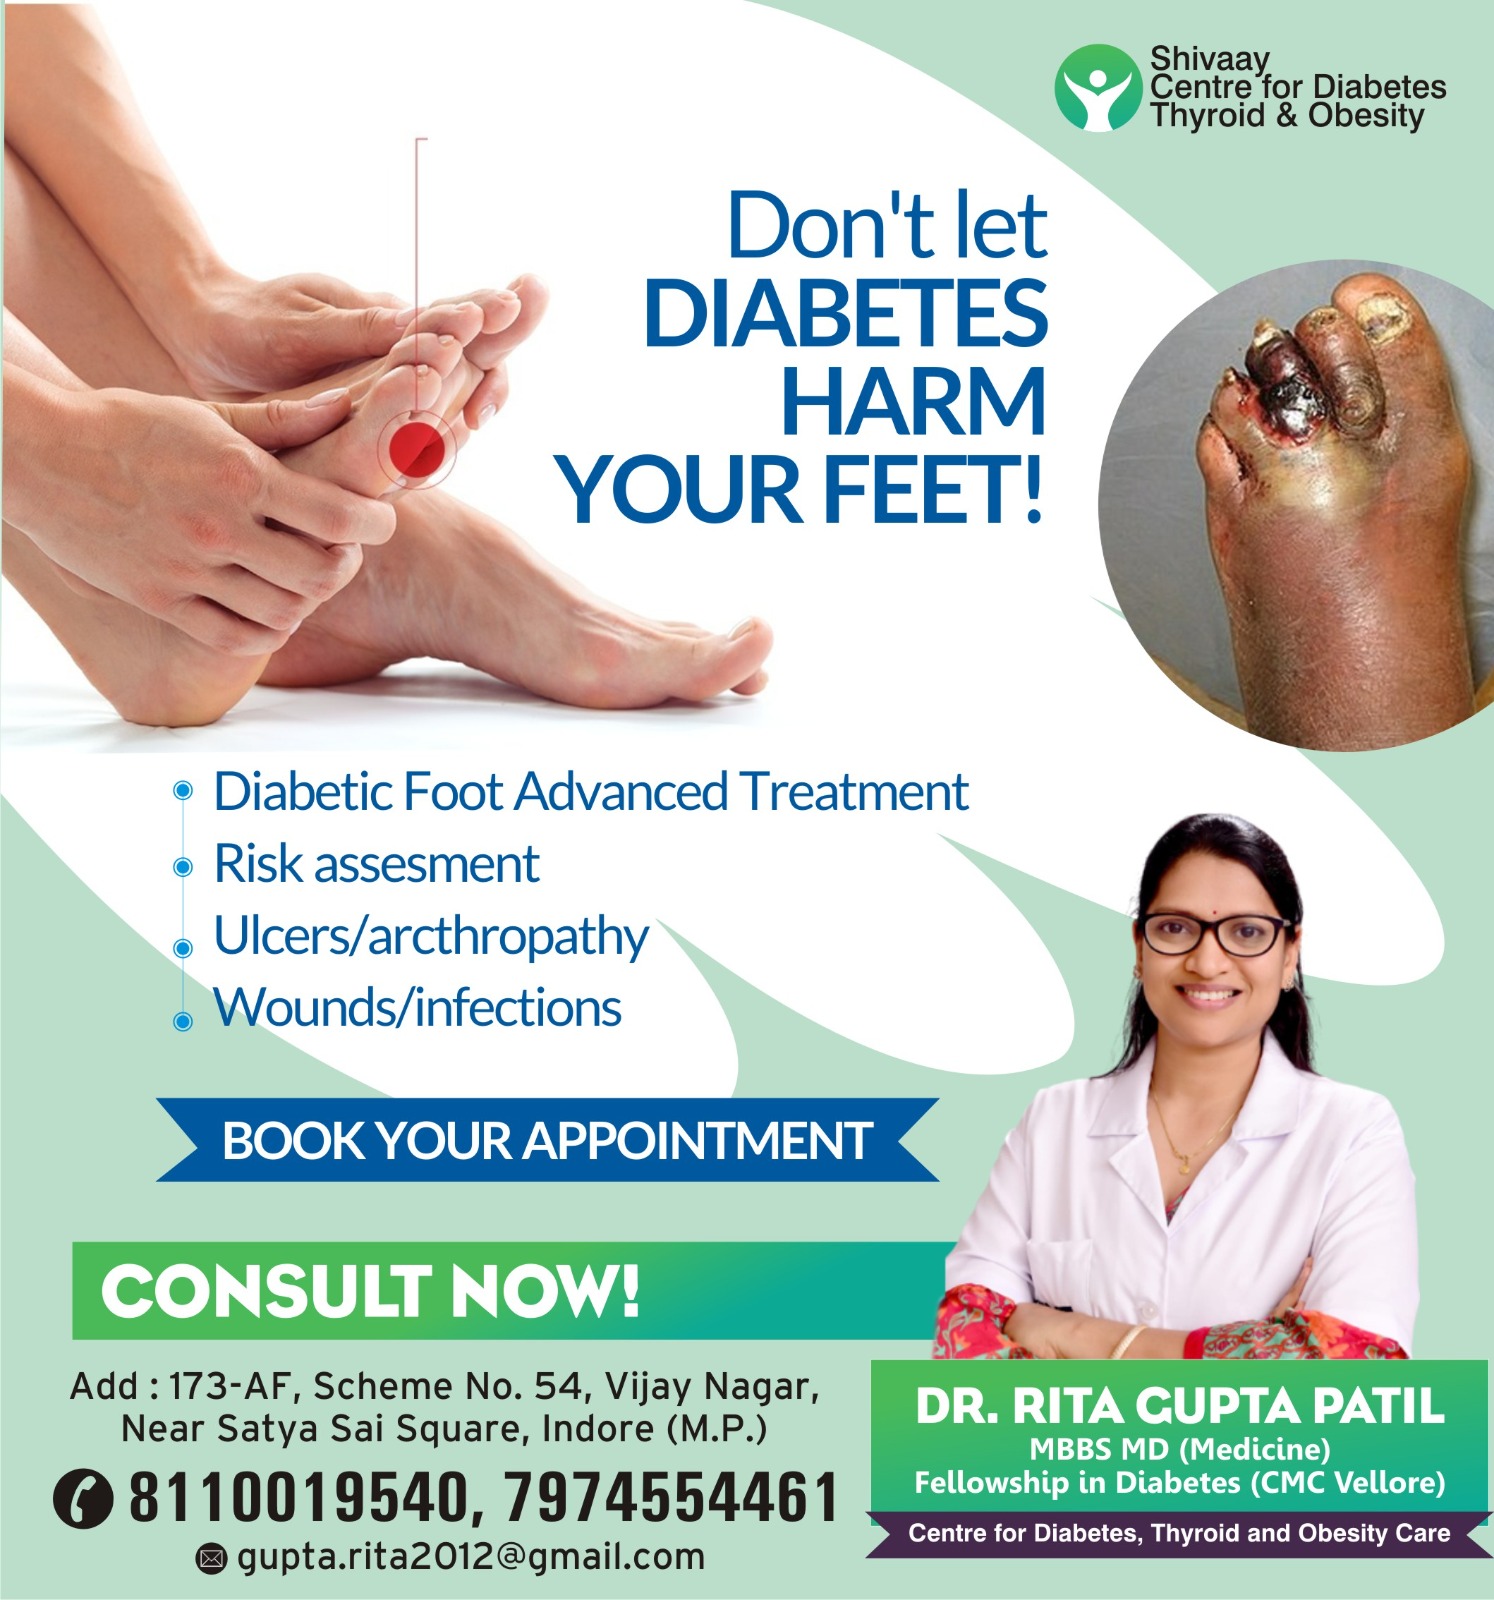 Best Diabetologist For Foot Diabetes Treatment in Indore